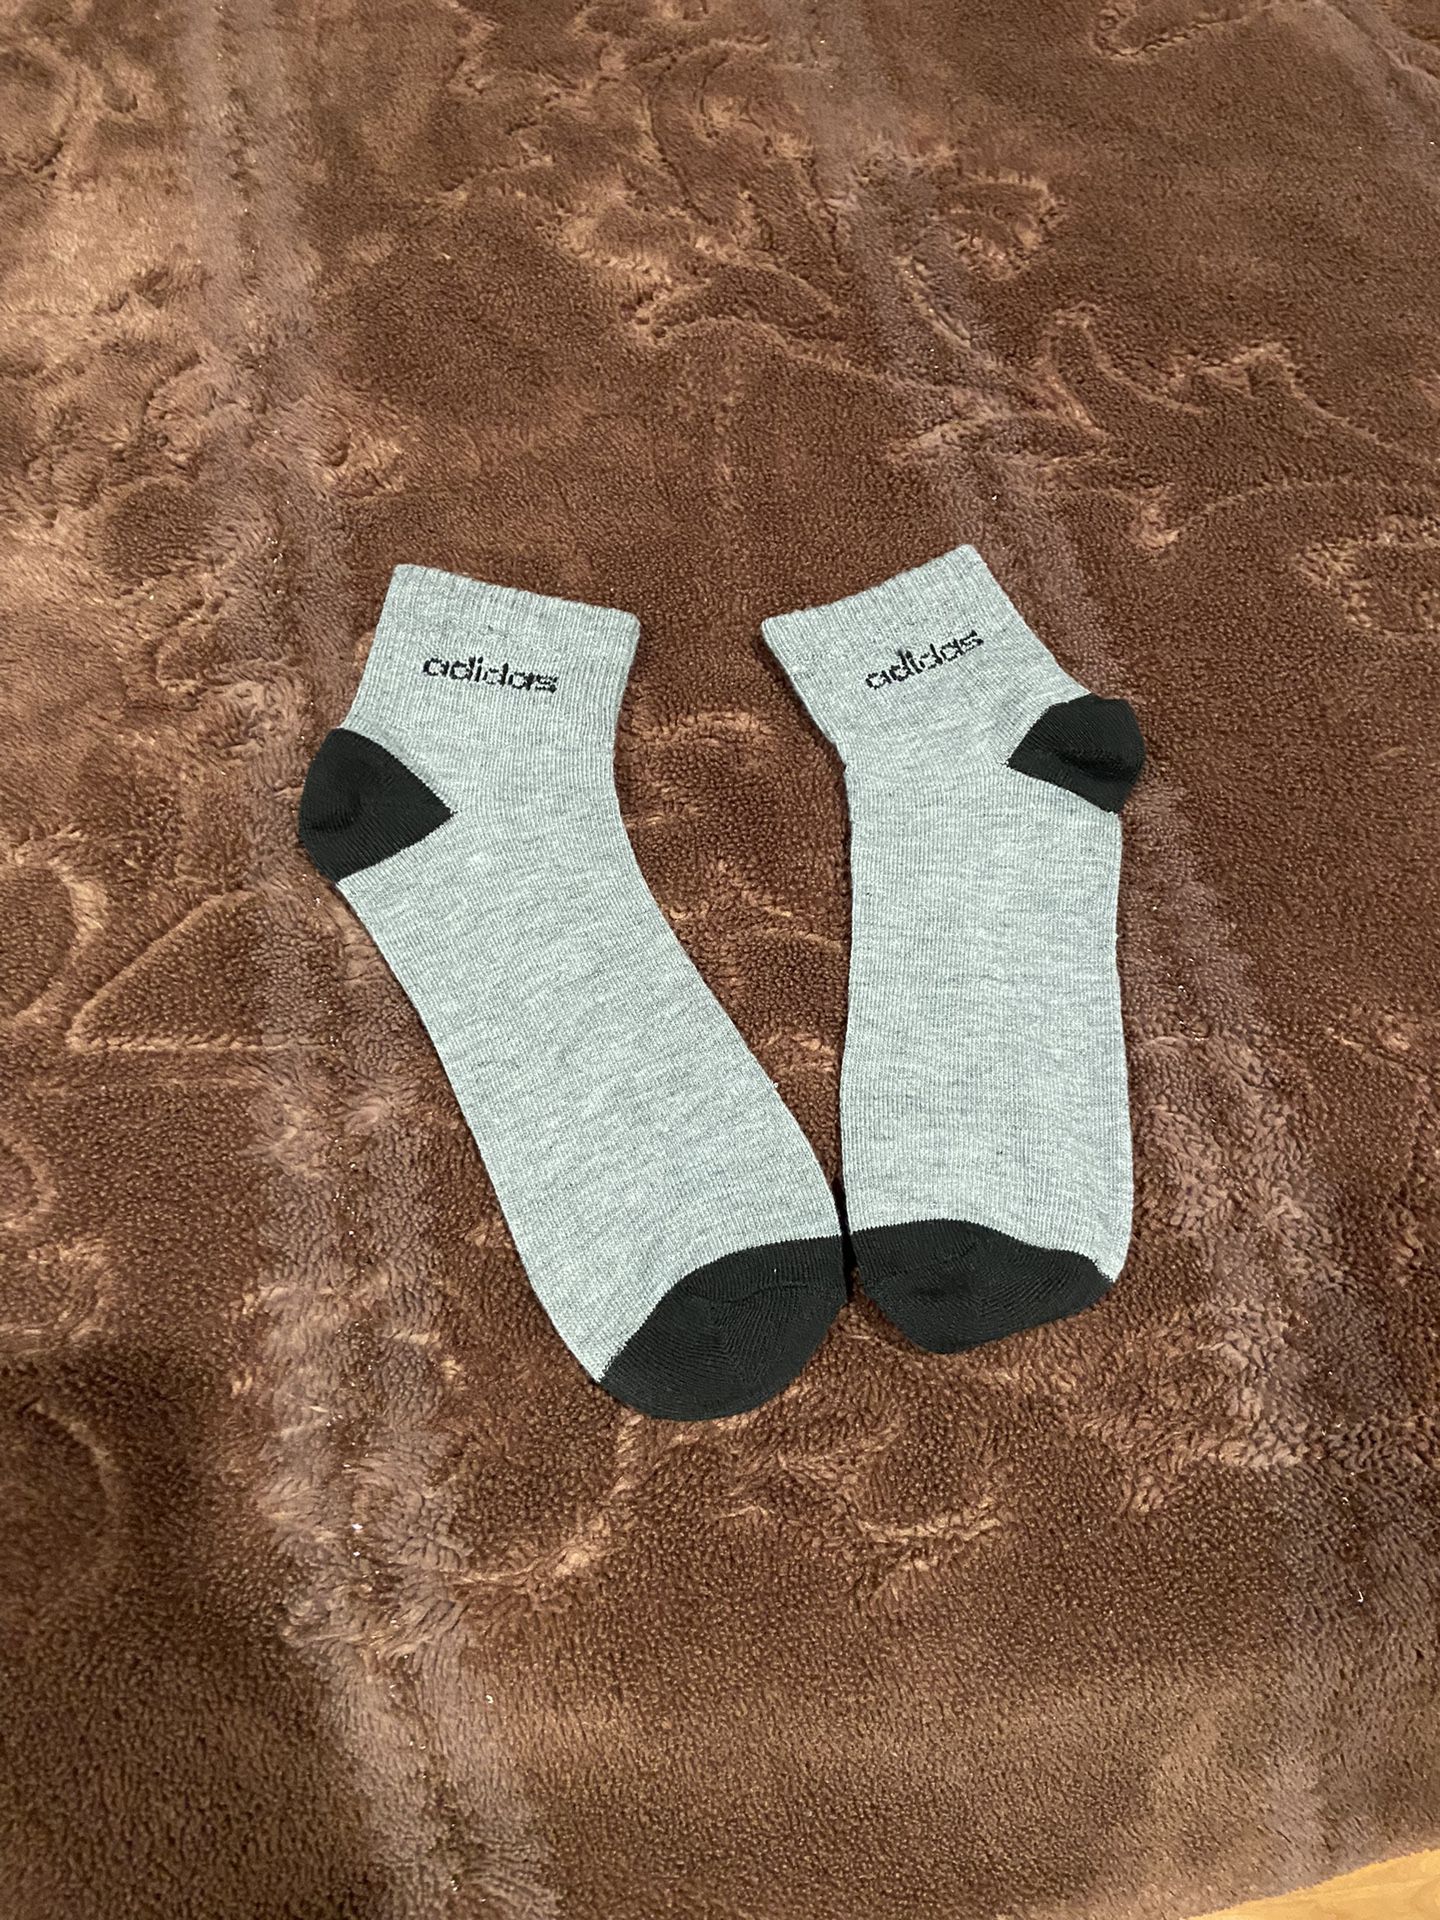 Adidas Mens Socks Size 6-1/2-10 New 1 Pair